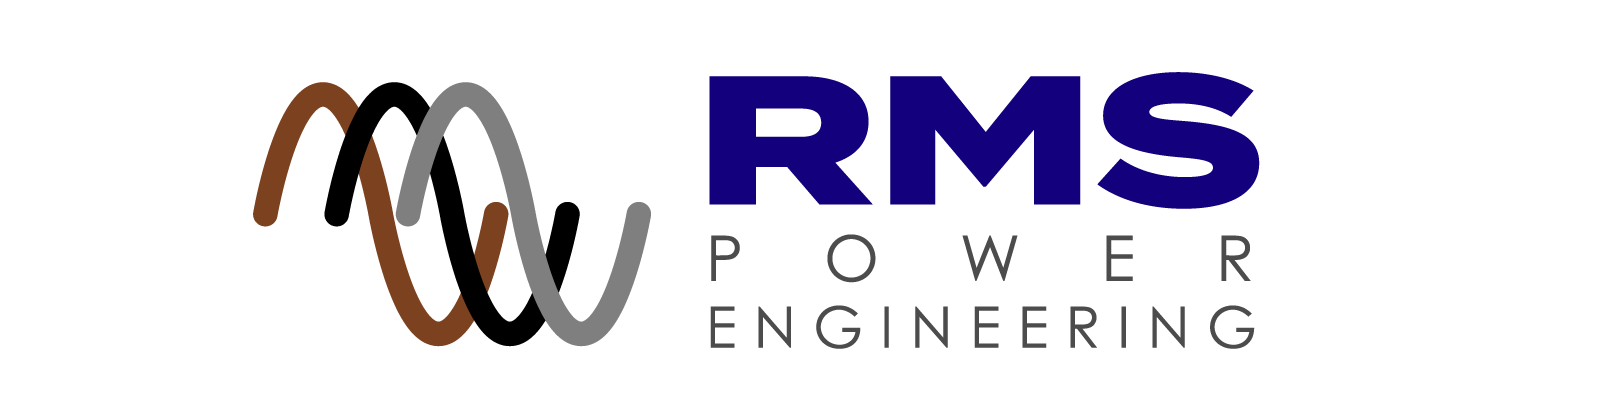 RMS Power Engineering